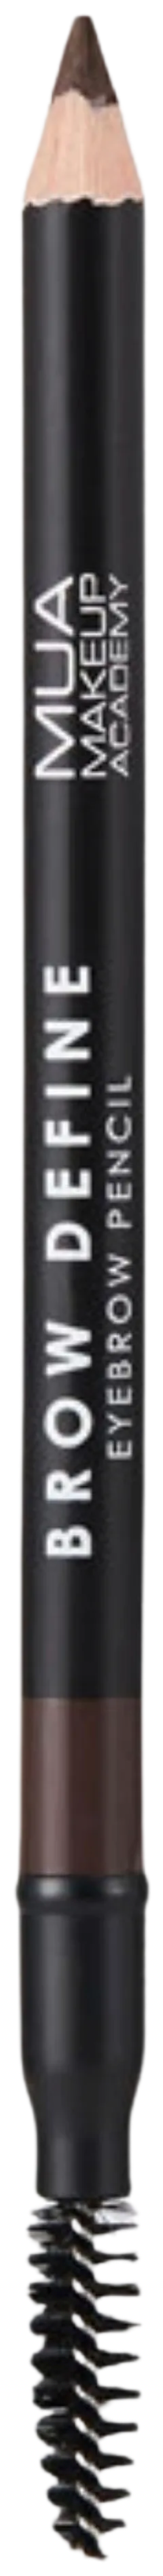 MUA Make Up Academy Brow Define Eyebrow Pencil 1,2 g Dark Brown kulmakynä - 1